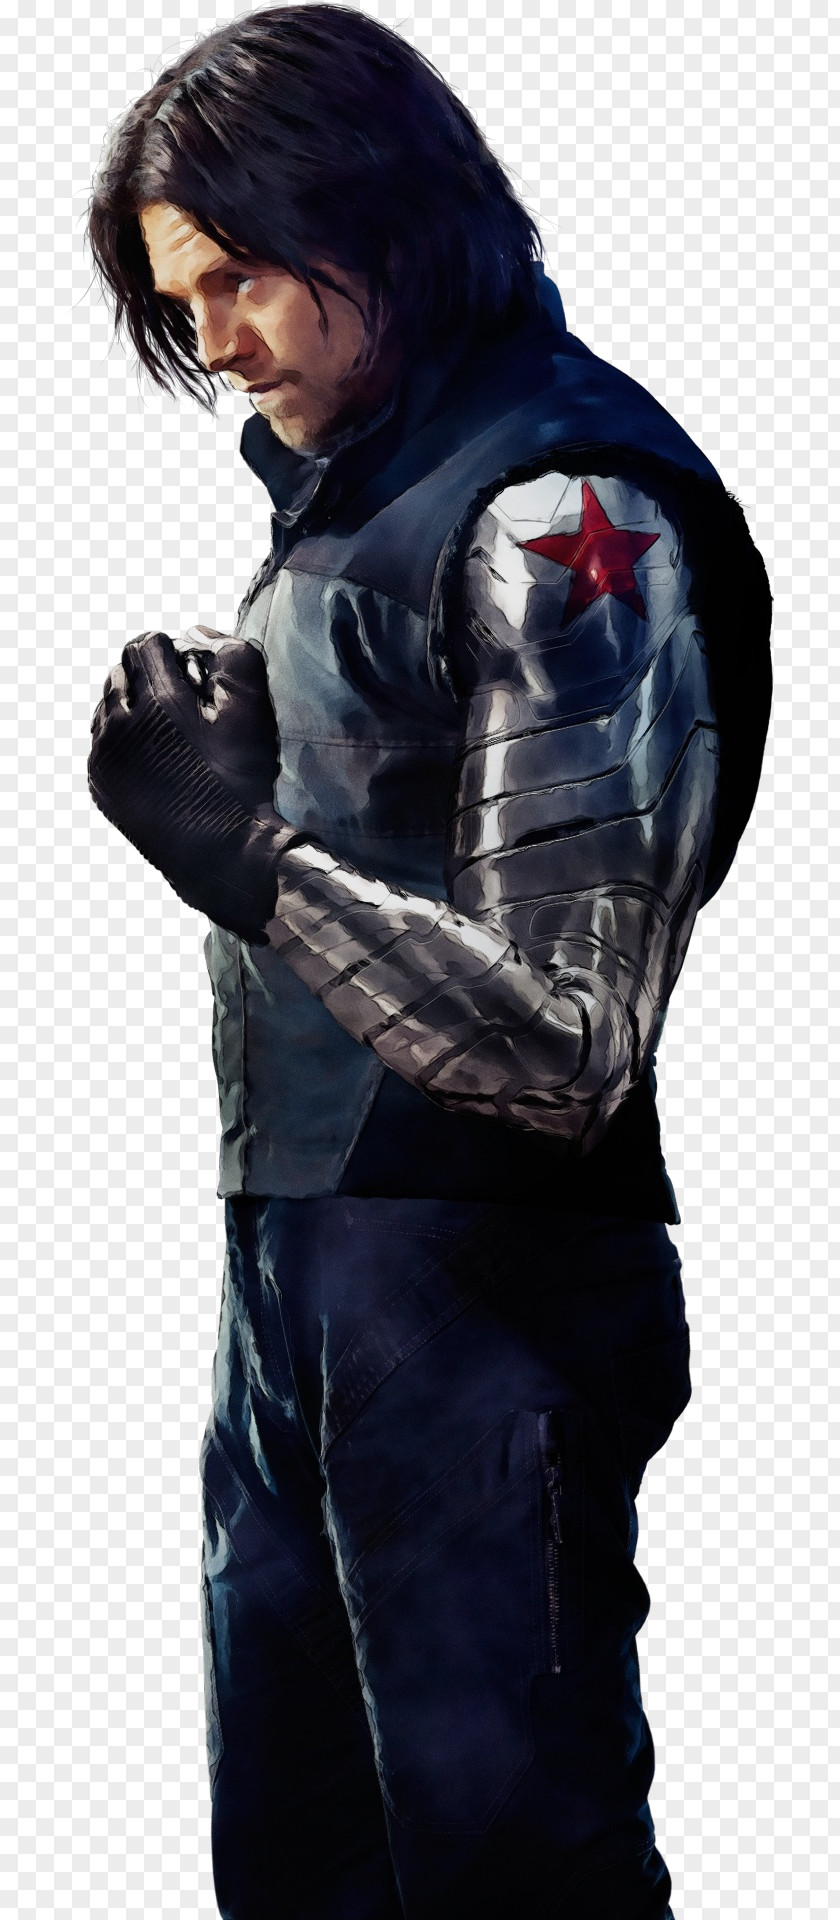 Bucky Barnes Captain America: The Winter Soldier Sebastian Stan Marvel Cinematic Universe Comics PNG